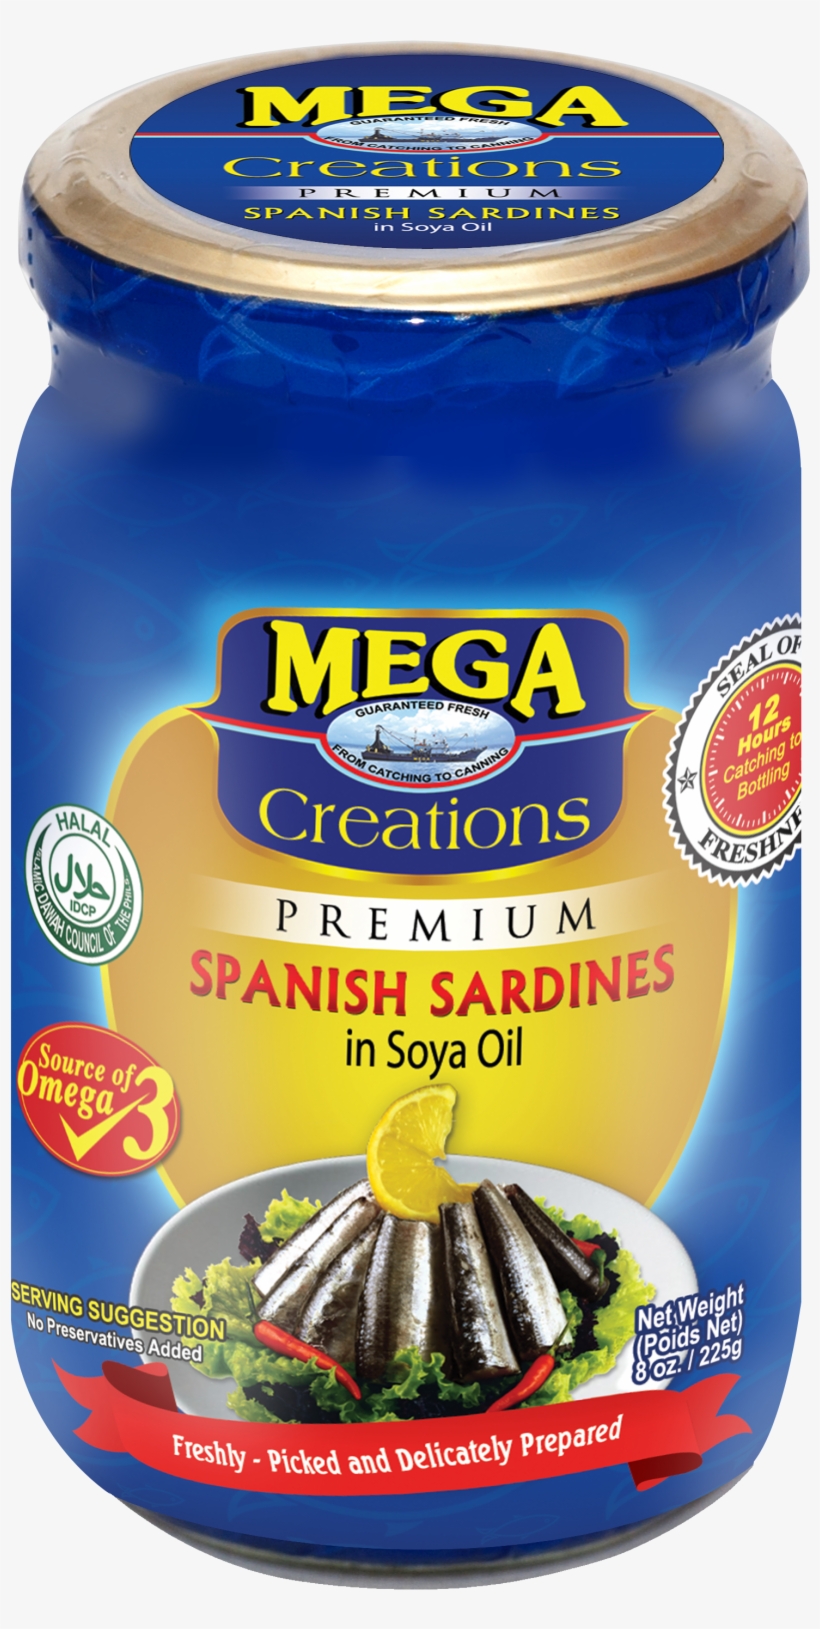 Mega Creations Spanish Sardines In Soya Oil - Mega Tuna, transparent png #4201125